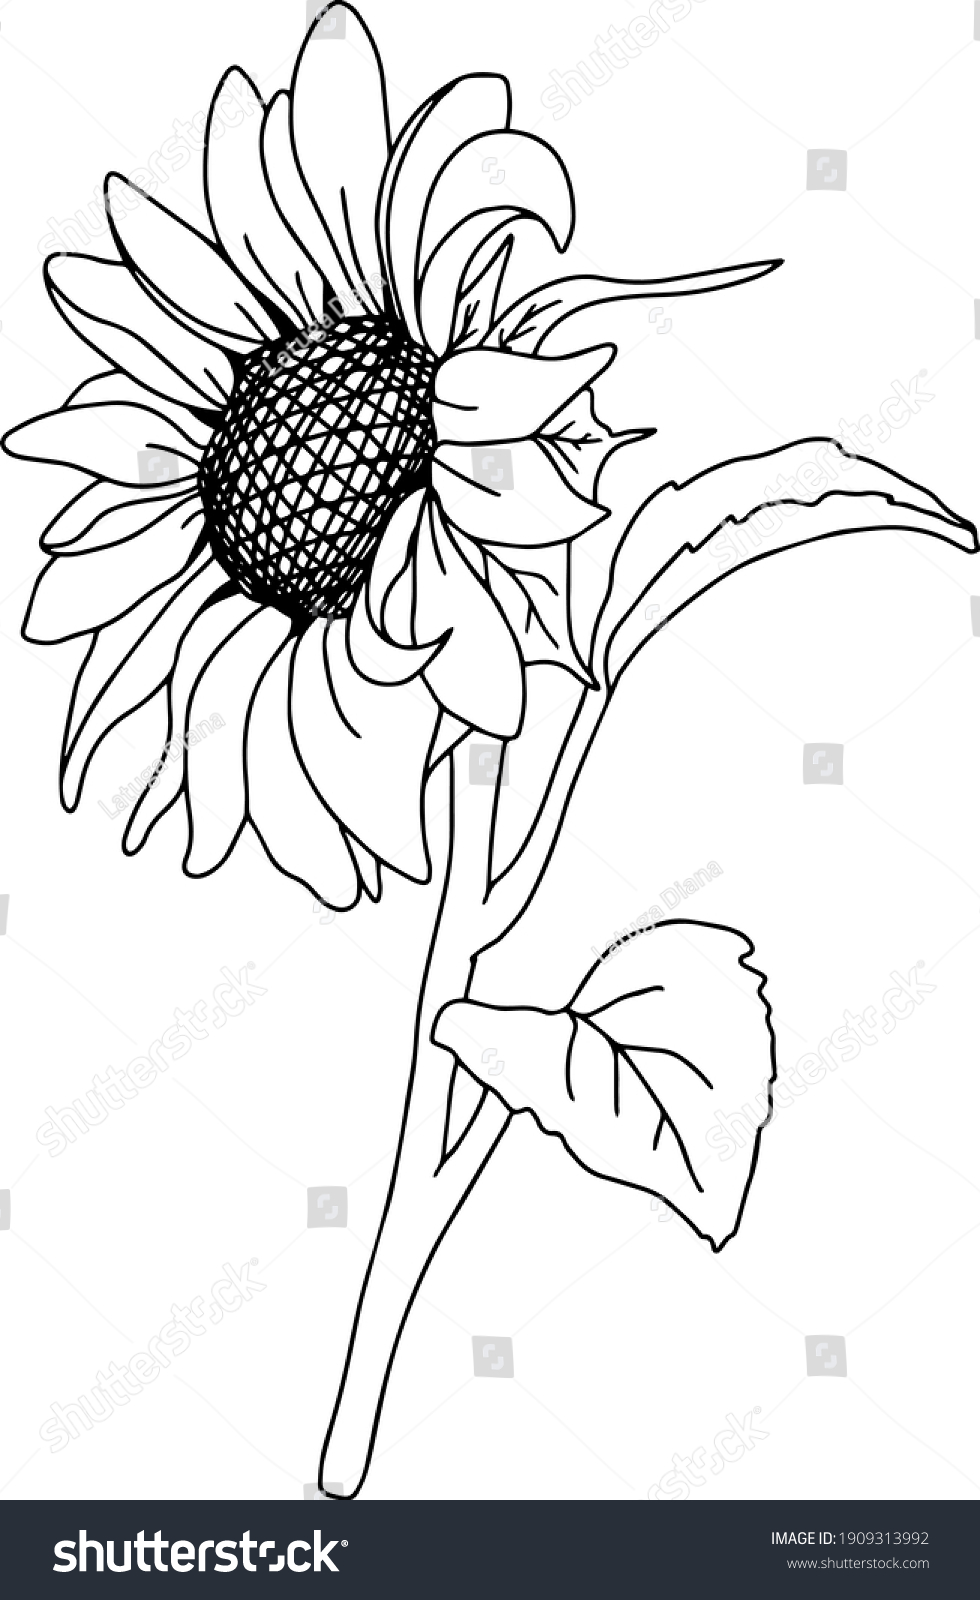 17,488 Sunflowers outline Images, Stock Photos & Vectors | Shutterstock